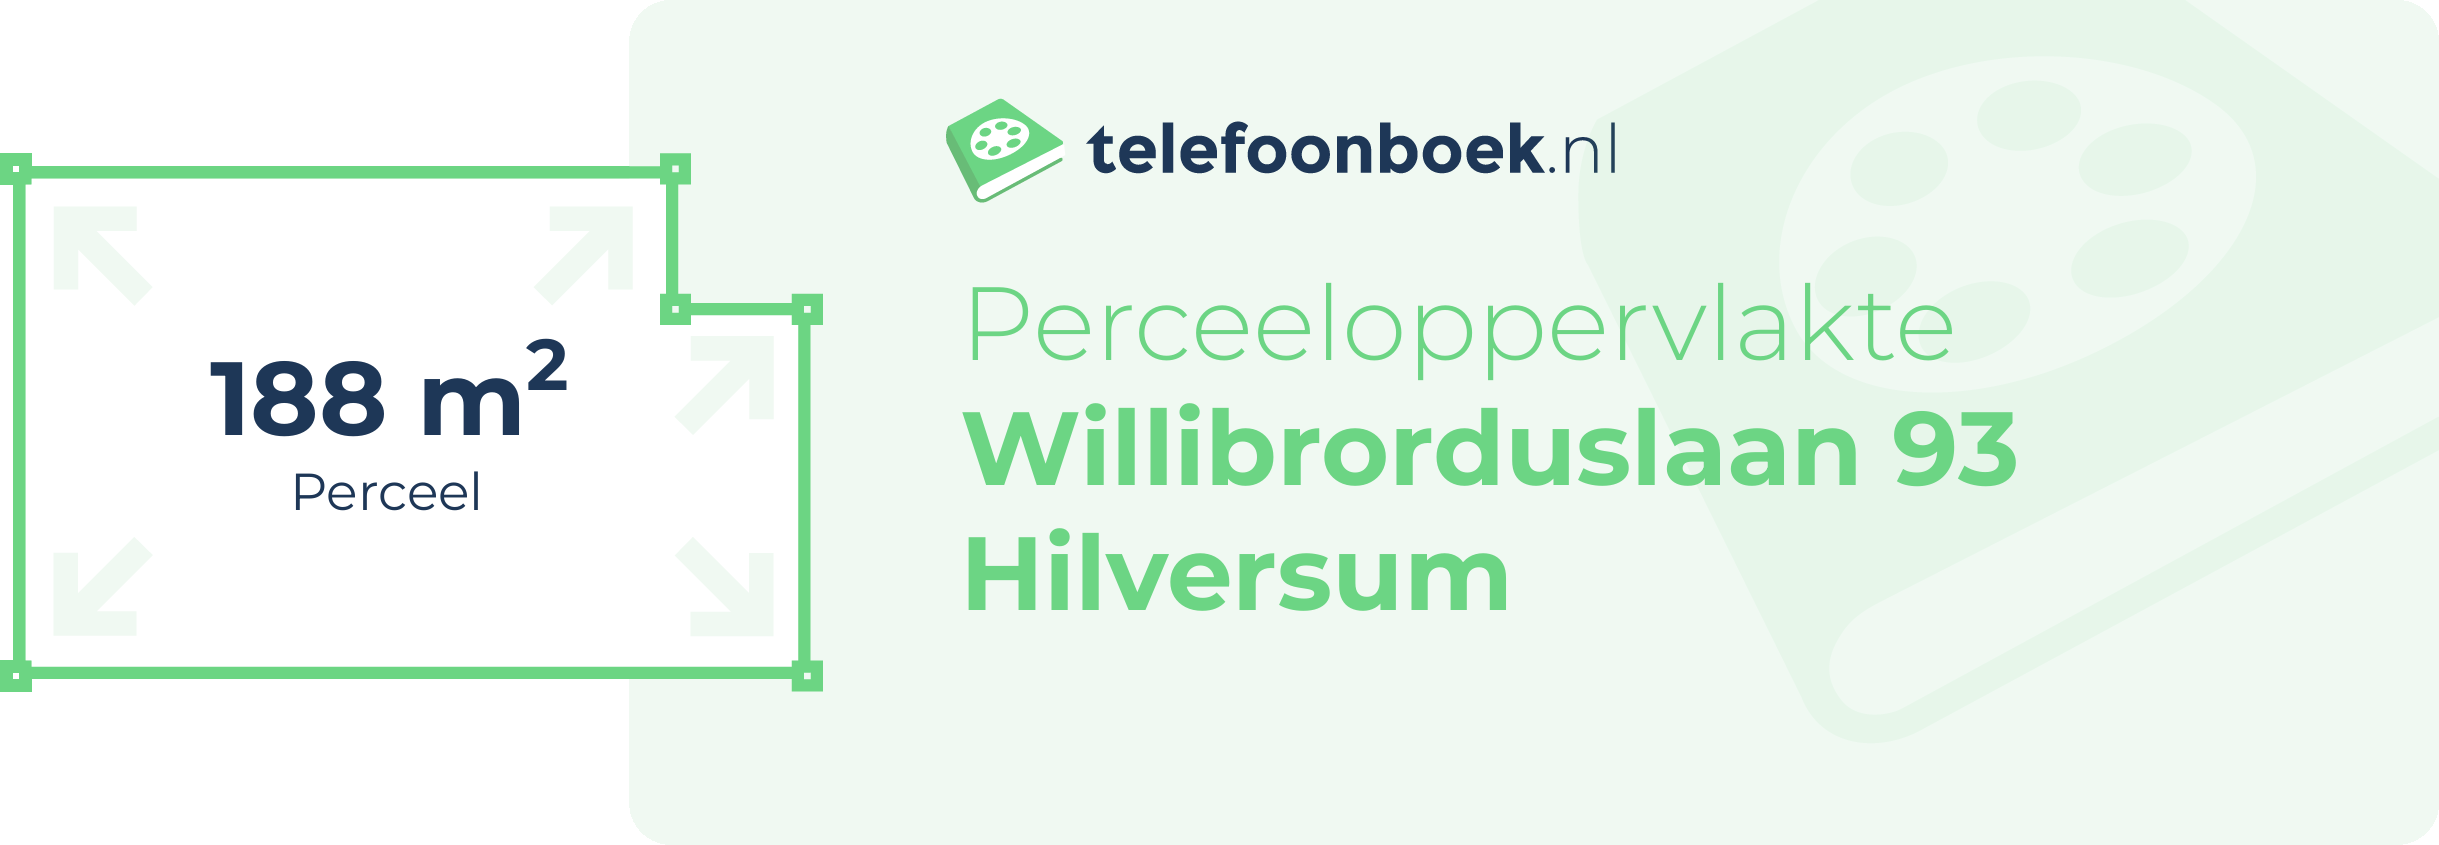 Perceeloppervlakte Willibrorduslaan 93 Hilversum